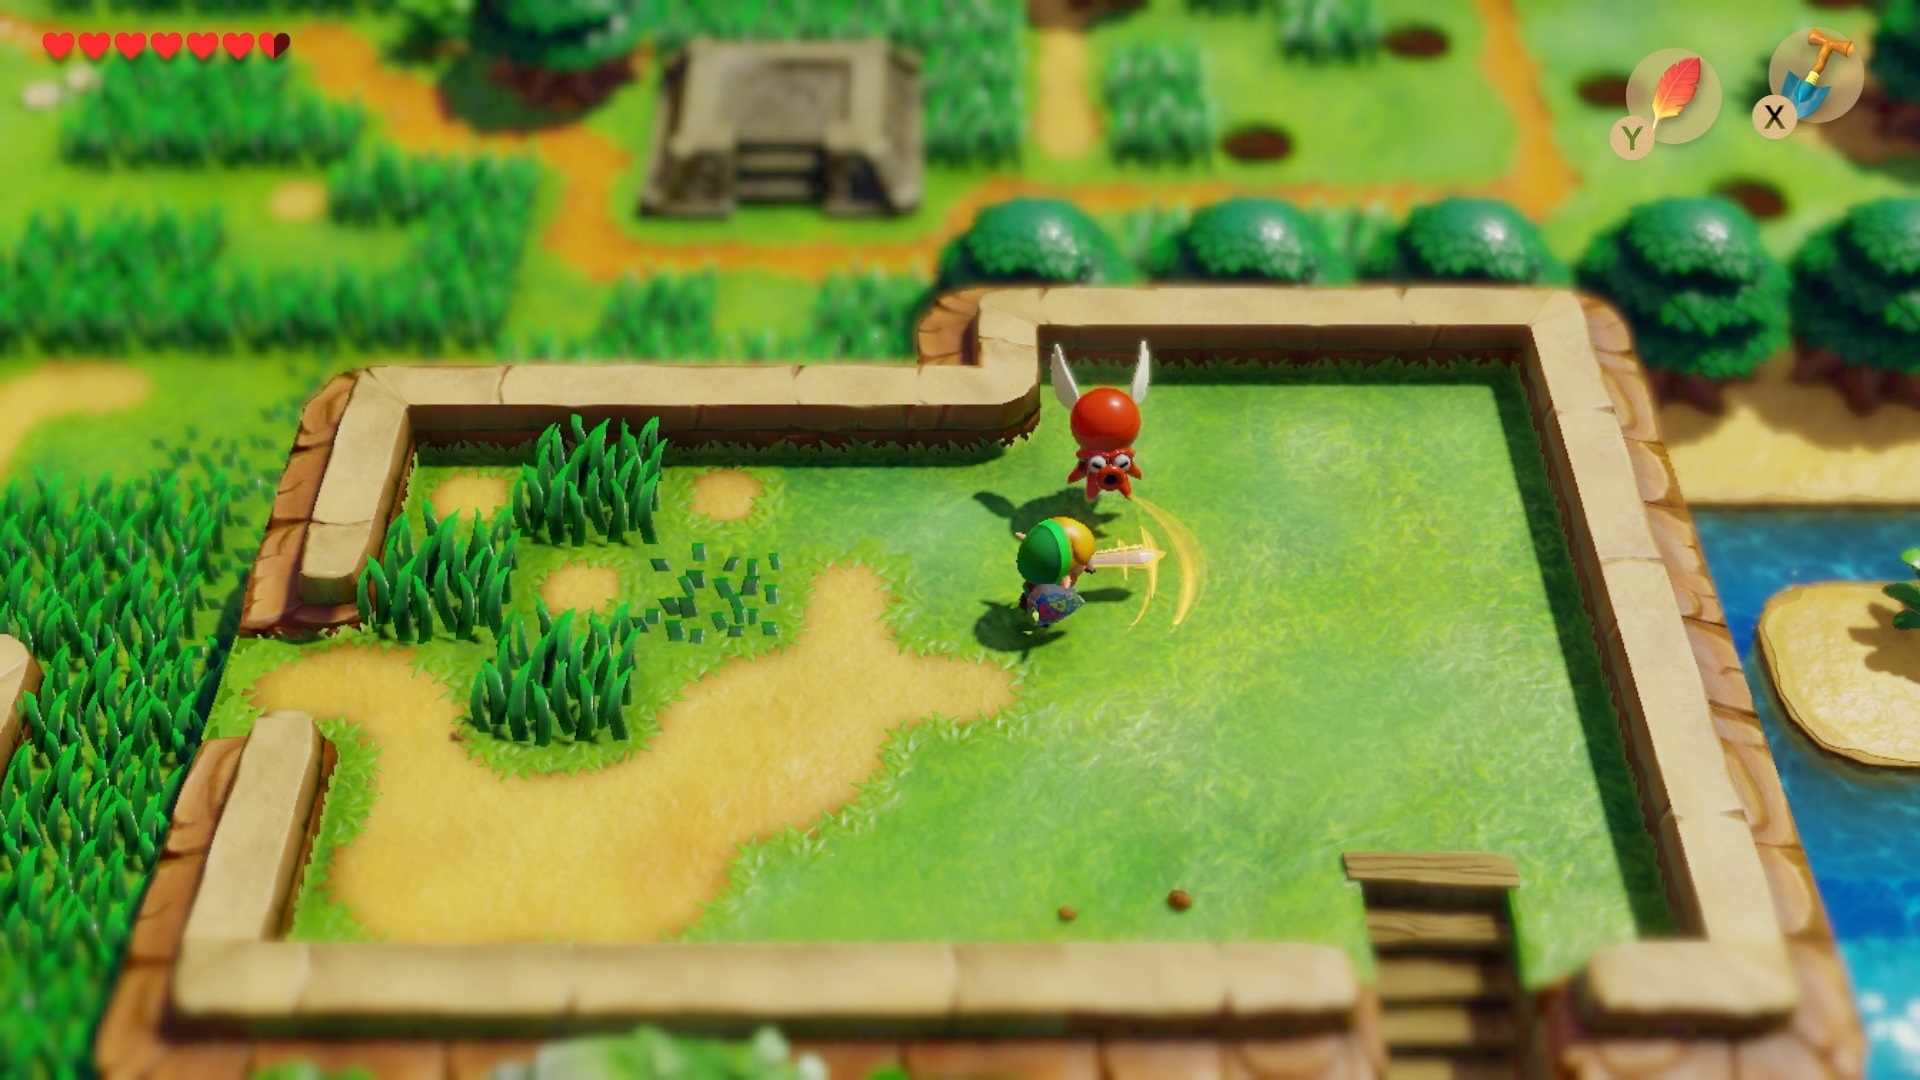 The Legend of Zelda: Link's Awakening, chain chomps (i think